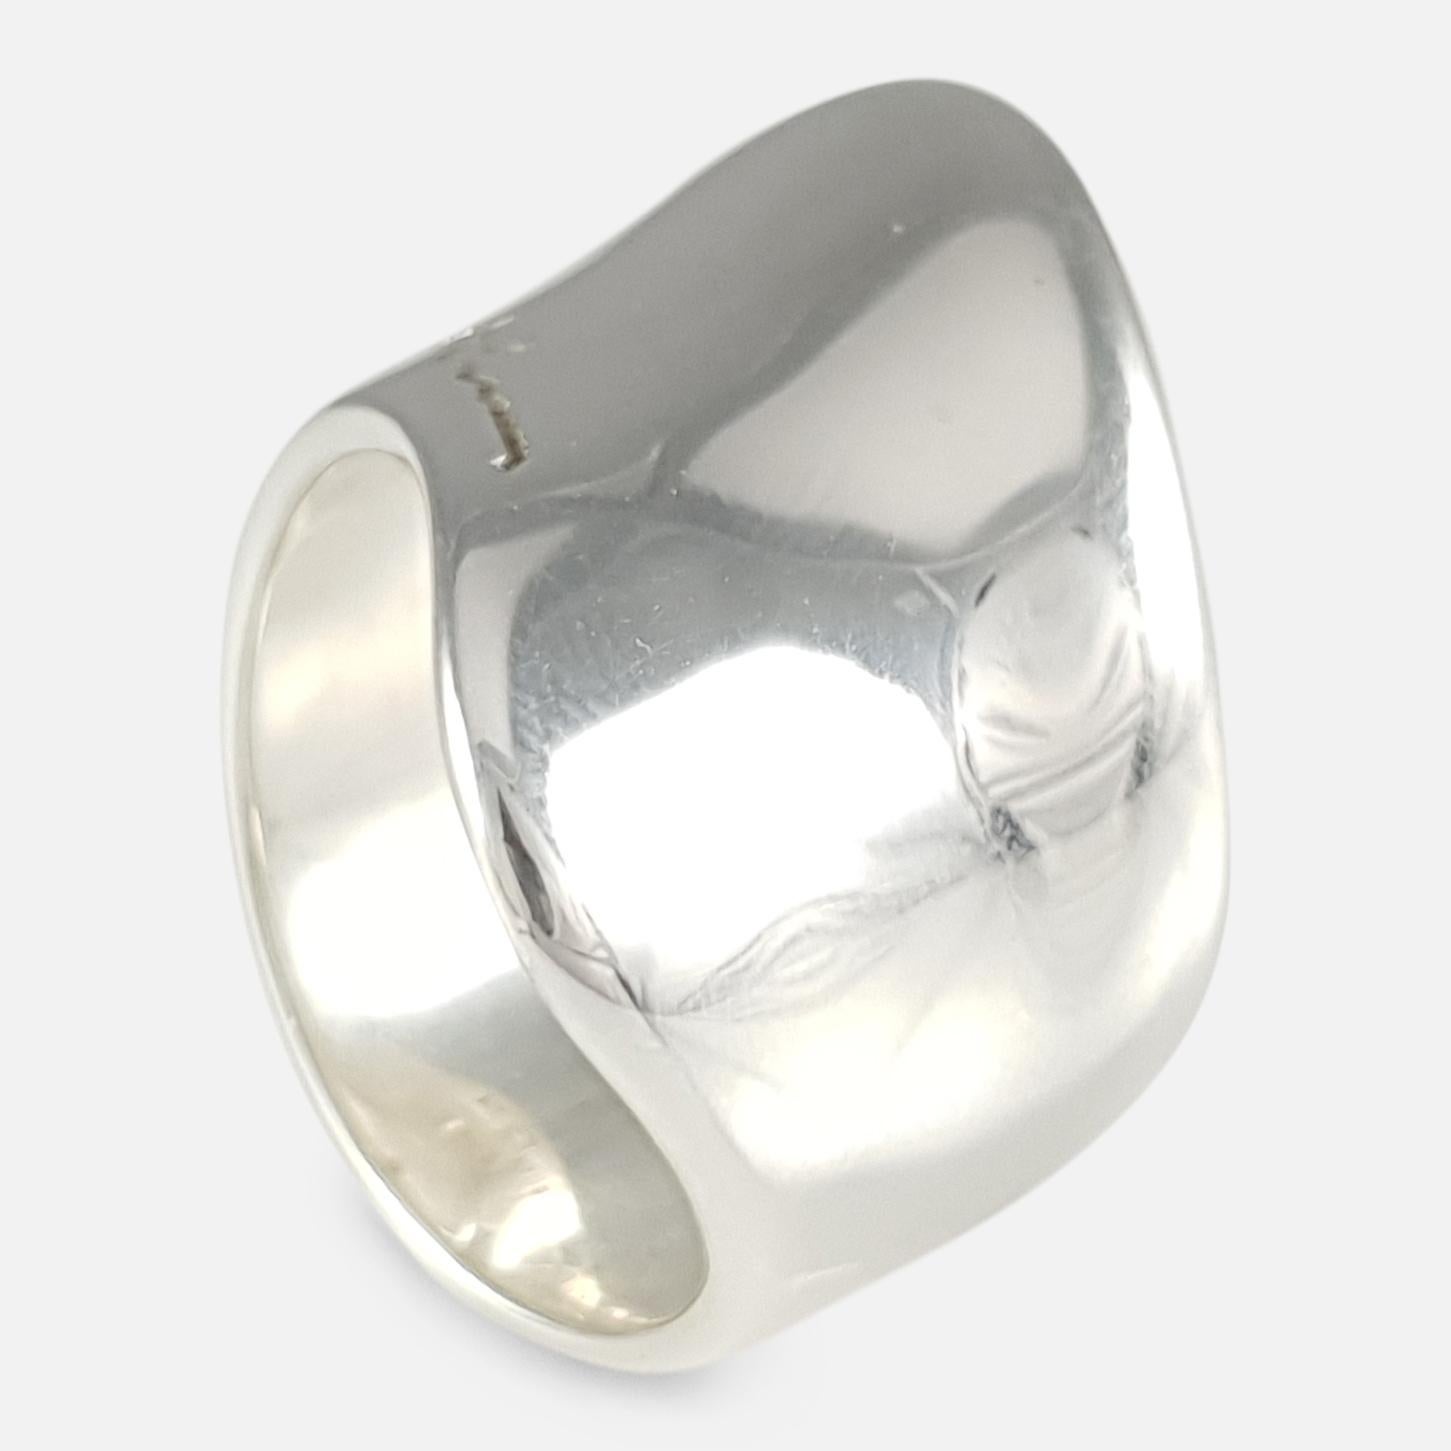 Georg Jensen Danish Sterling Silver Modernist Ring #257 by Minas Spiridis 2